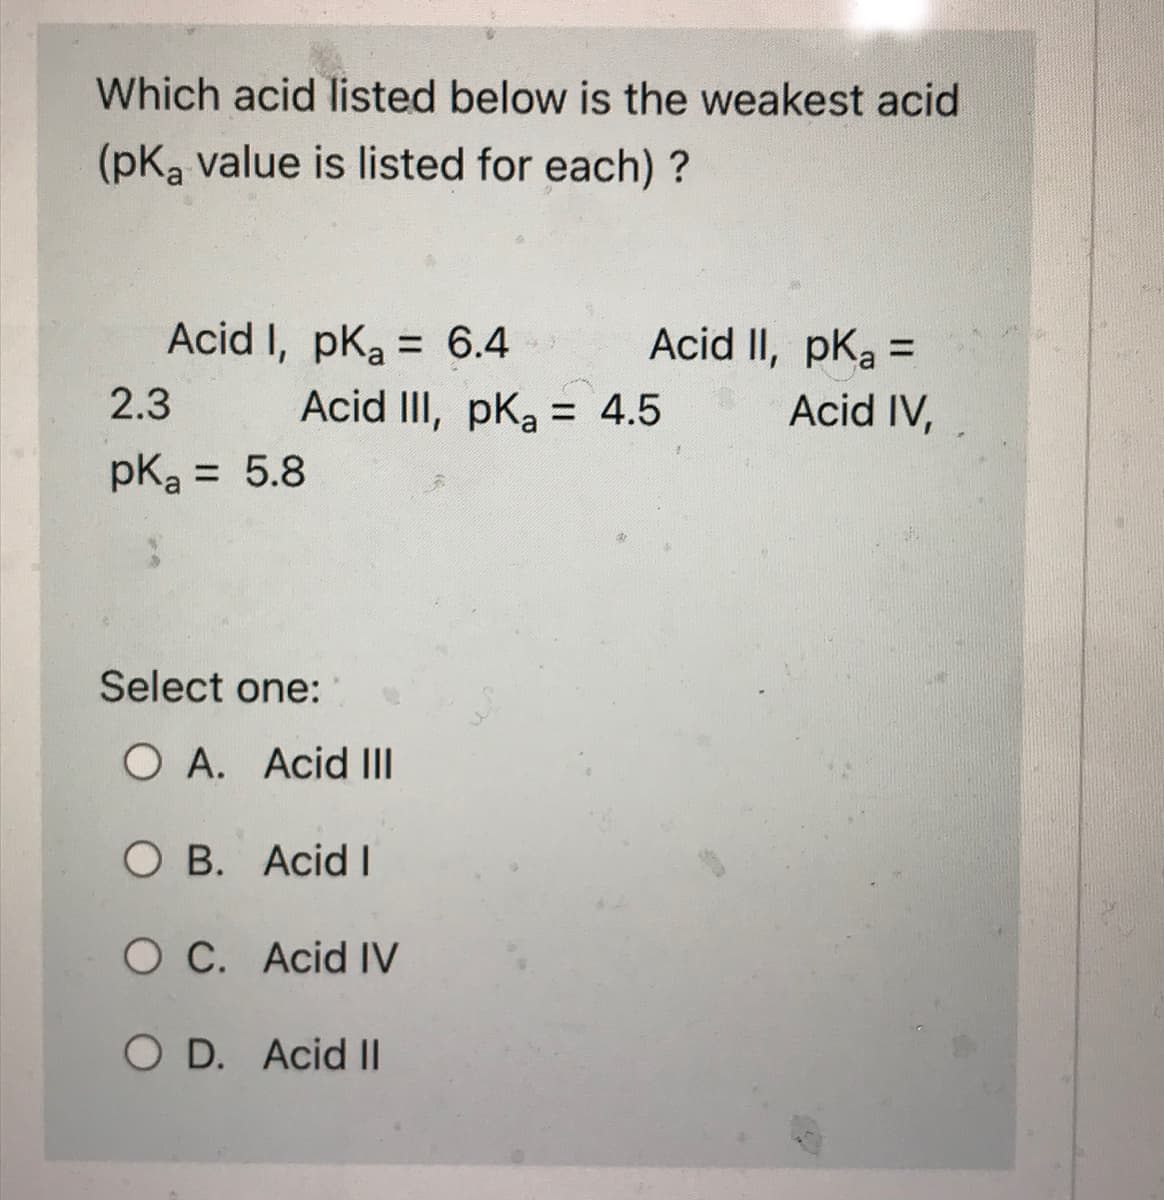 Which acid listed below is the weakest acid
(pKa value is listed for each)?
Acid I, pKa = 6.4
2.3
pka = 5.8
Acid III, pK₂ = 4.5
Acid II, pka =
Acid IV,
Select one:
O A. Acid III
O B. Acid I
O C. Acid IV
O D. Acid II